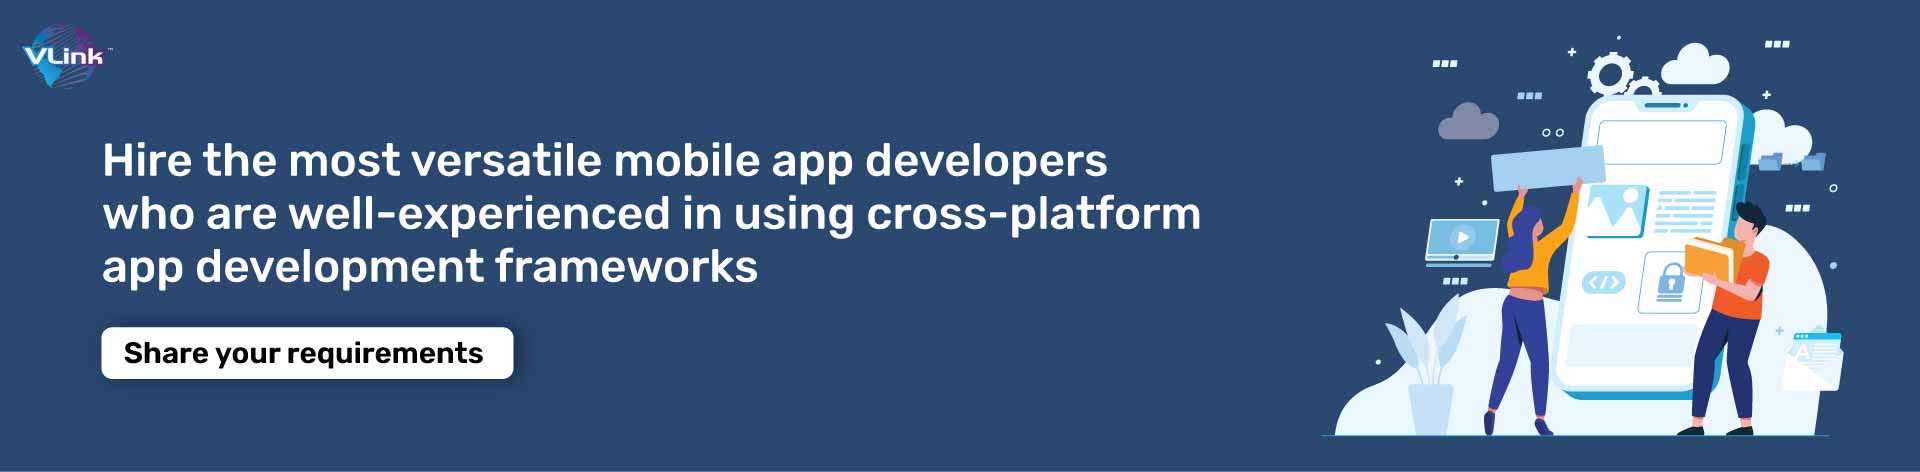 cross-platform-app-development-frameworks-cta